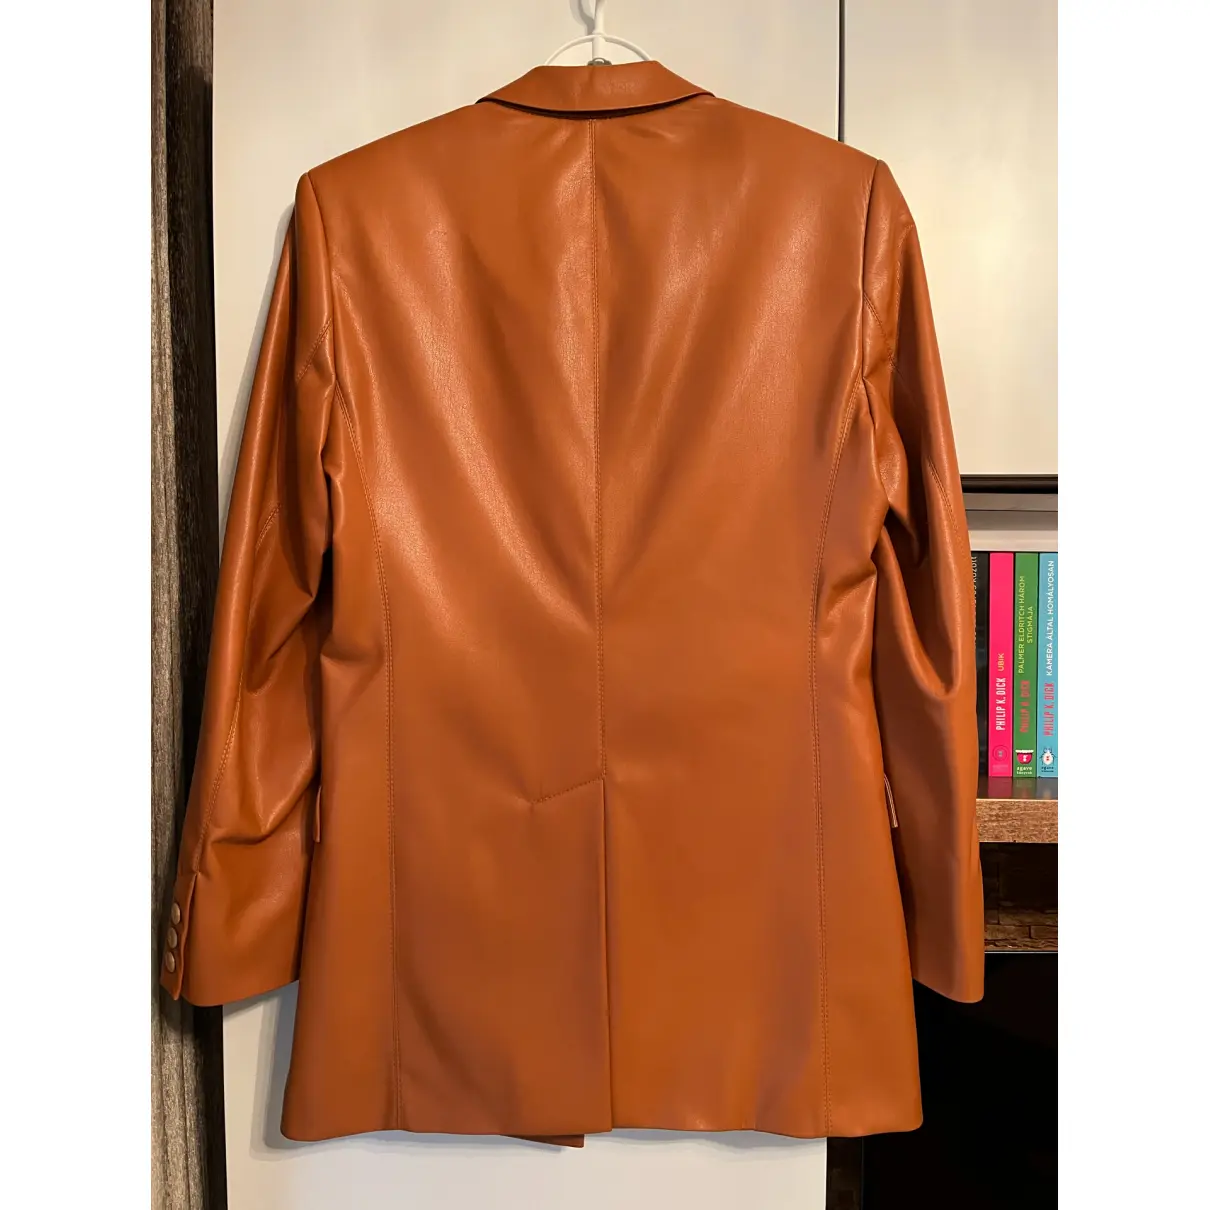 Buy Nanushka Vegan leather jacket online